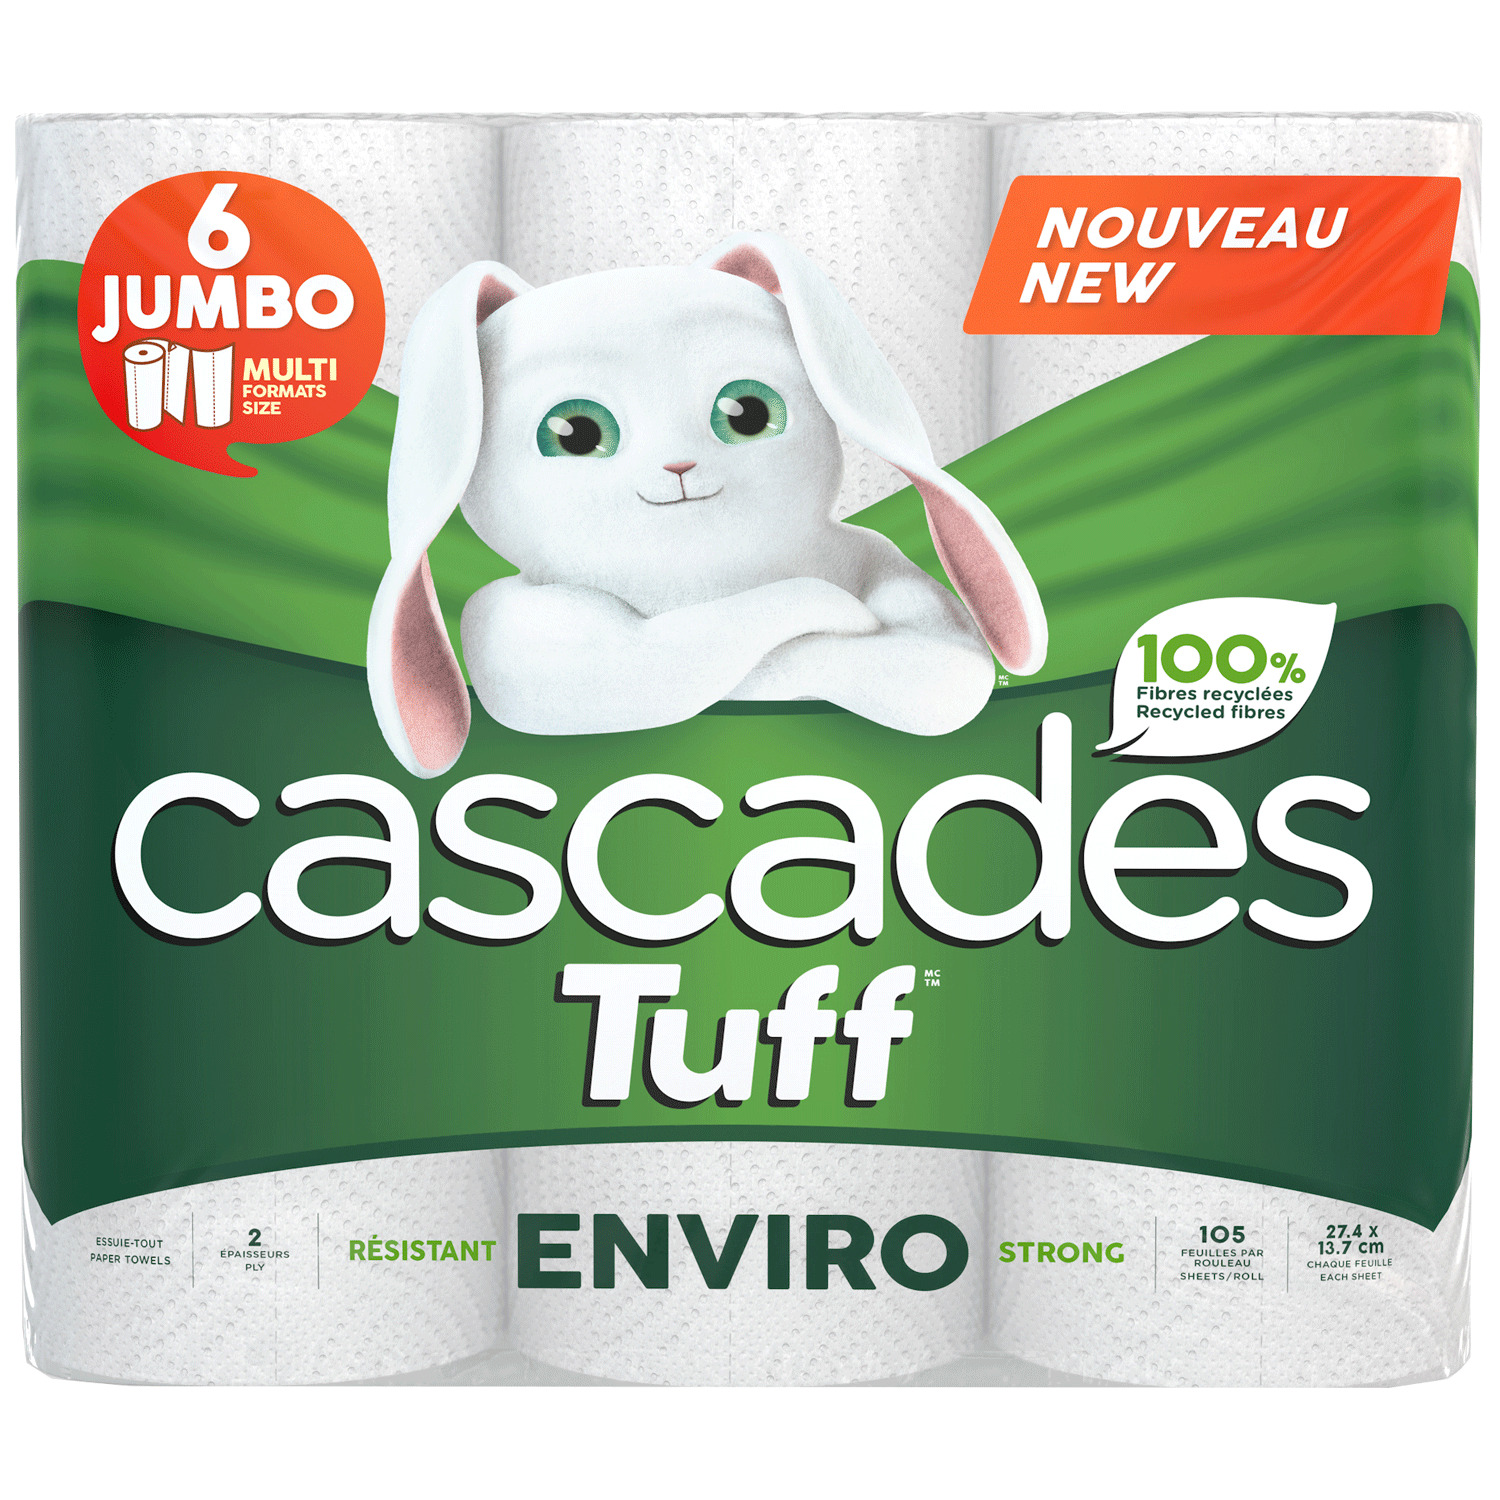 Cascades - Tuff Enviro strong paper towels, pk. of 6 - JUMBO size